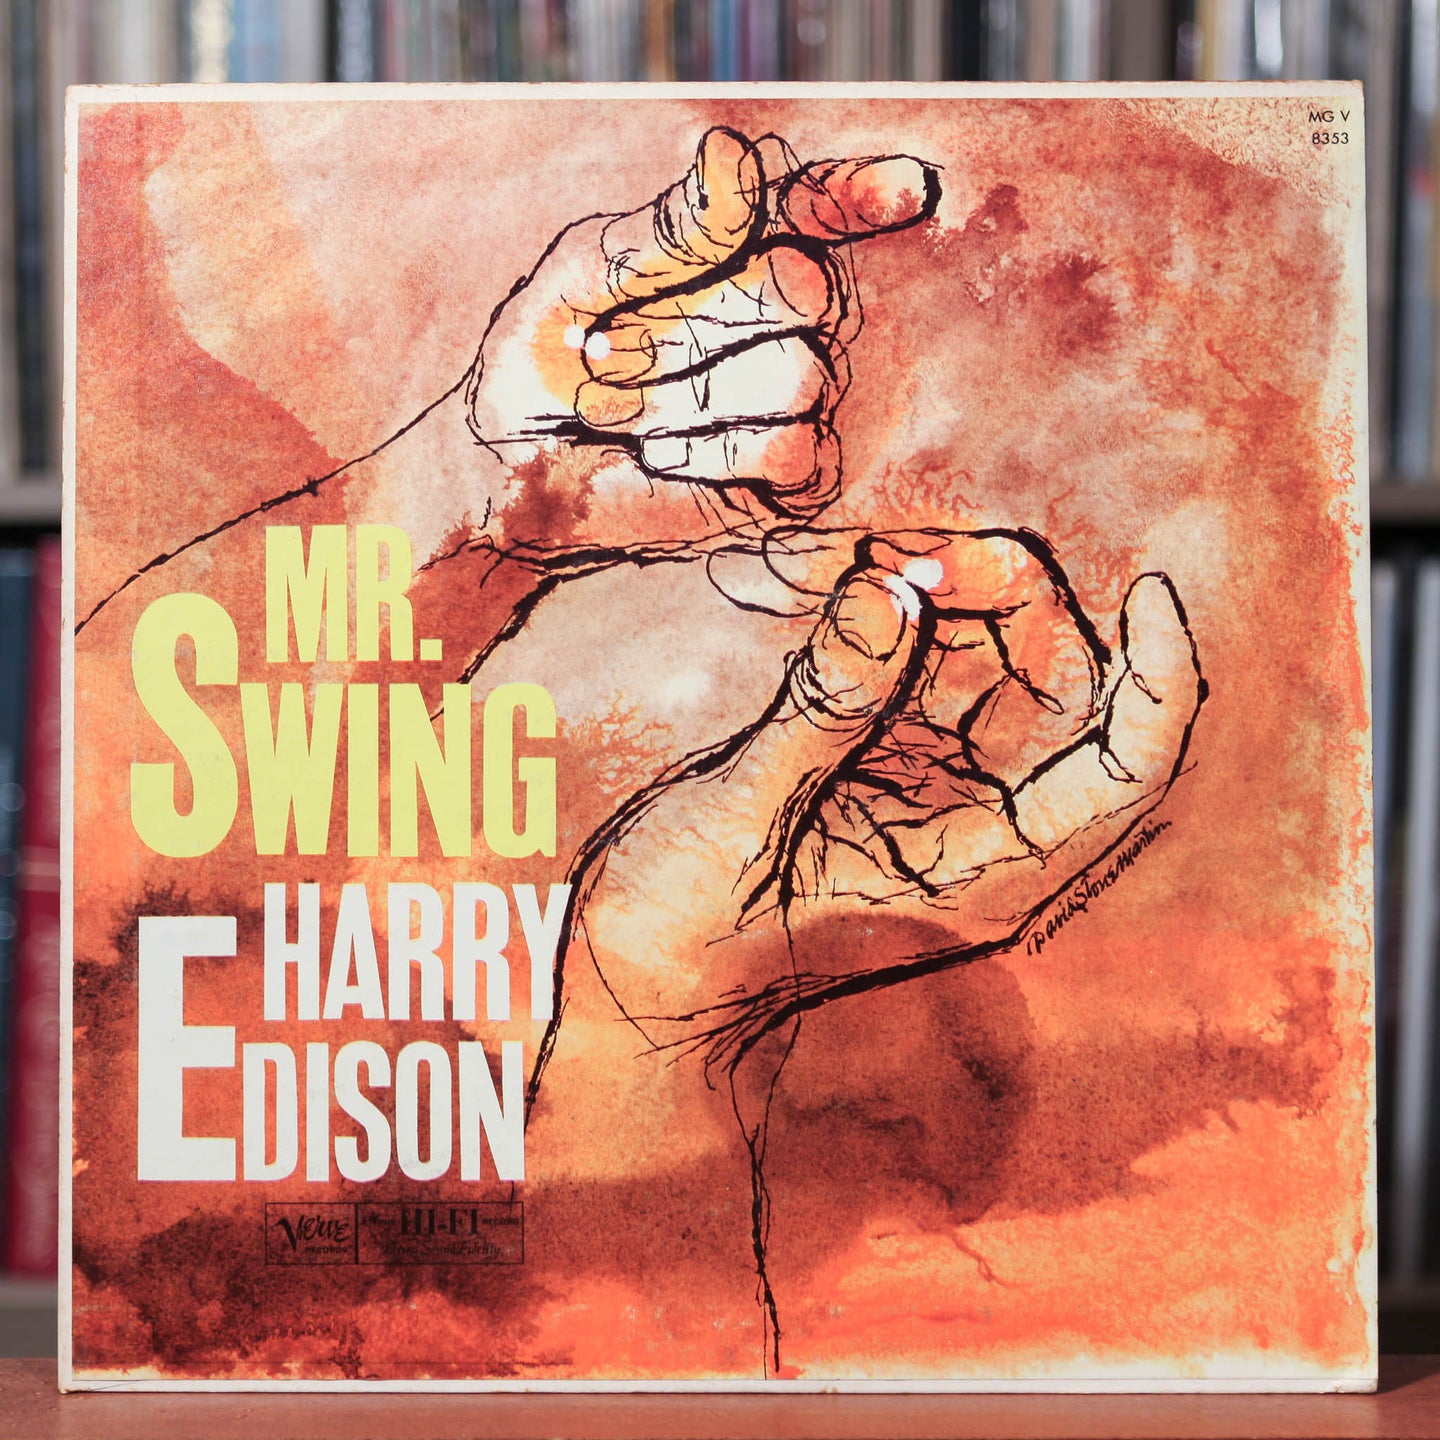 Harry Edison - Mr. Swing - 1958 Verve, EX/VG